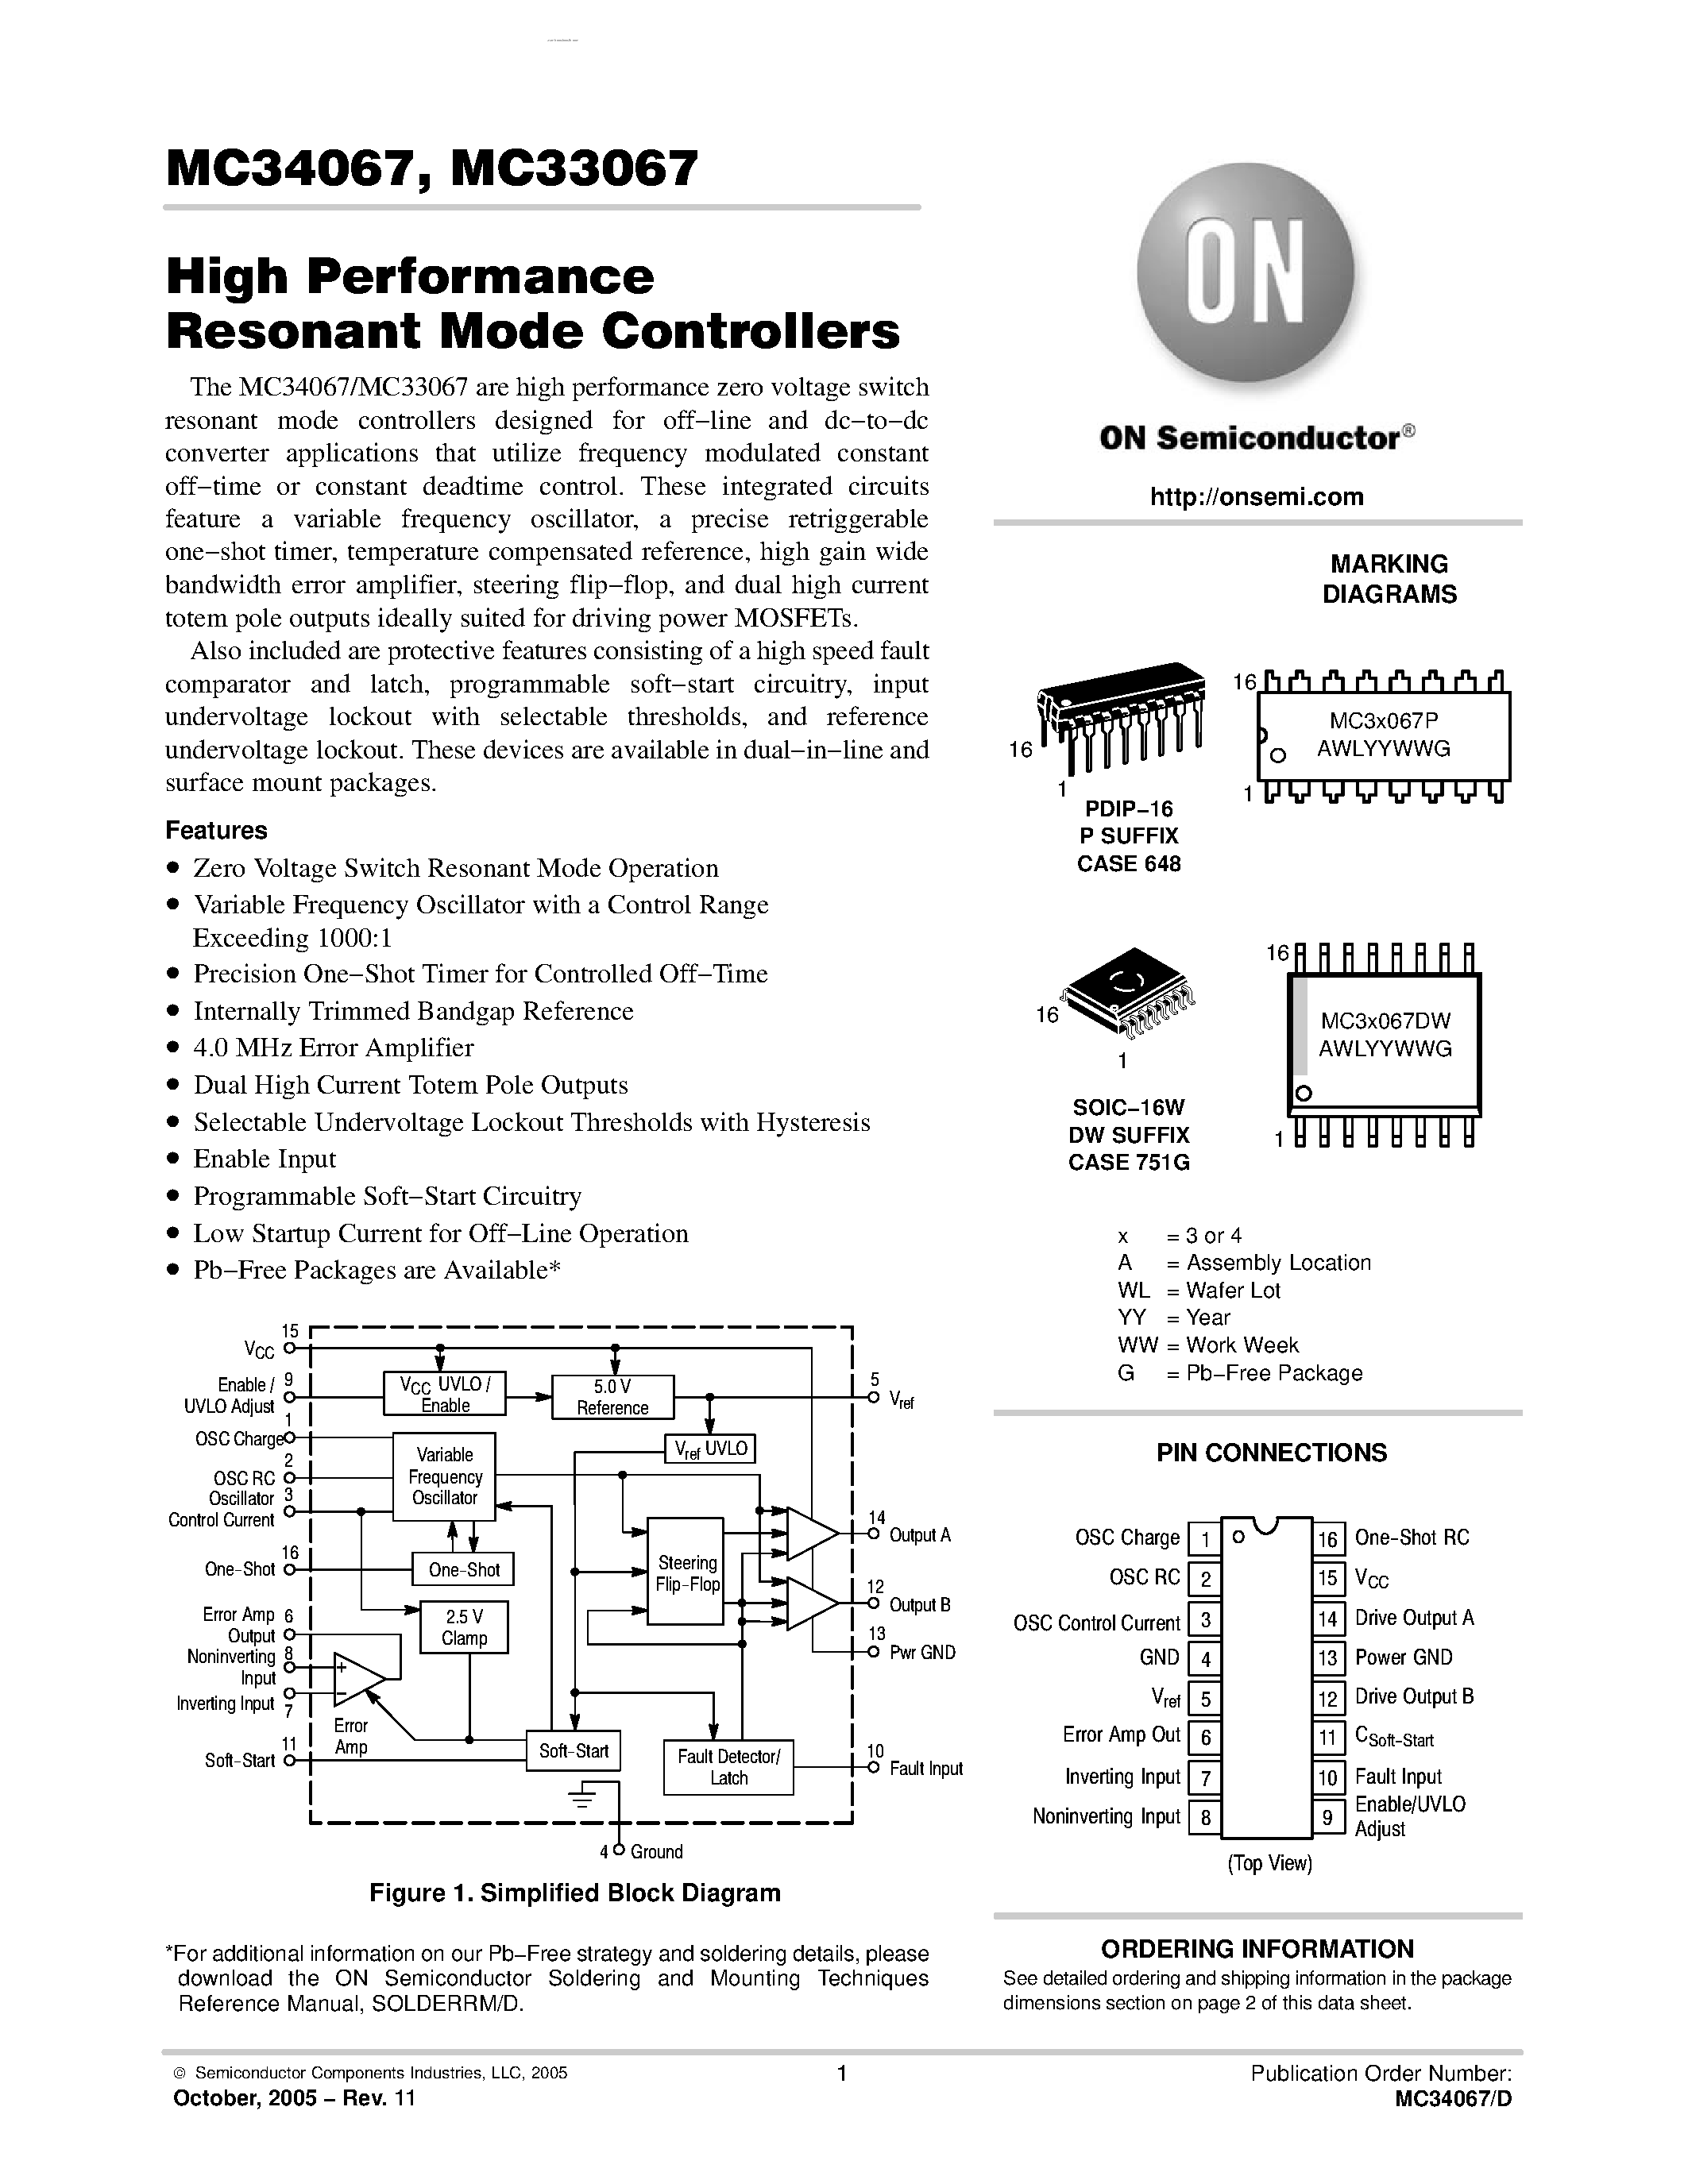 Datasheet MC33067 - (MC33067 / MC34067) High Performance Resonant Mode Controllers page 1